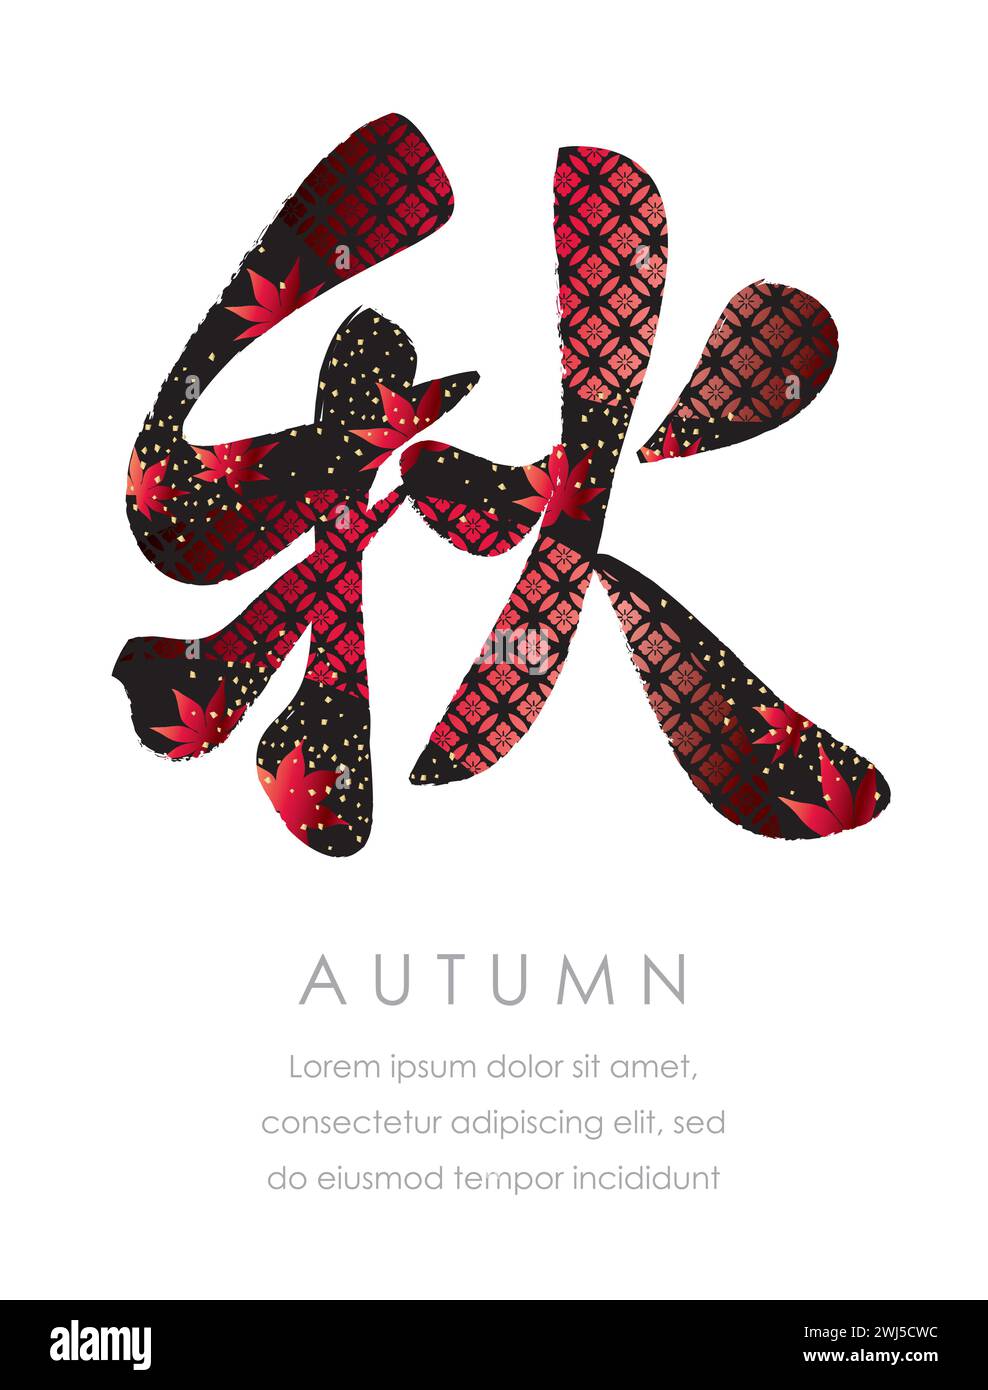 Japanische Kanji-Figur Kalligraphie, AKI, dekoriert mit Vintage-Mustern, Vektor-Illustration. Textübersetzung - Herbst. Stock Vektor